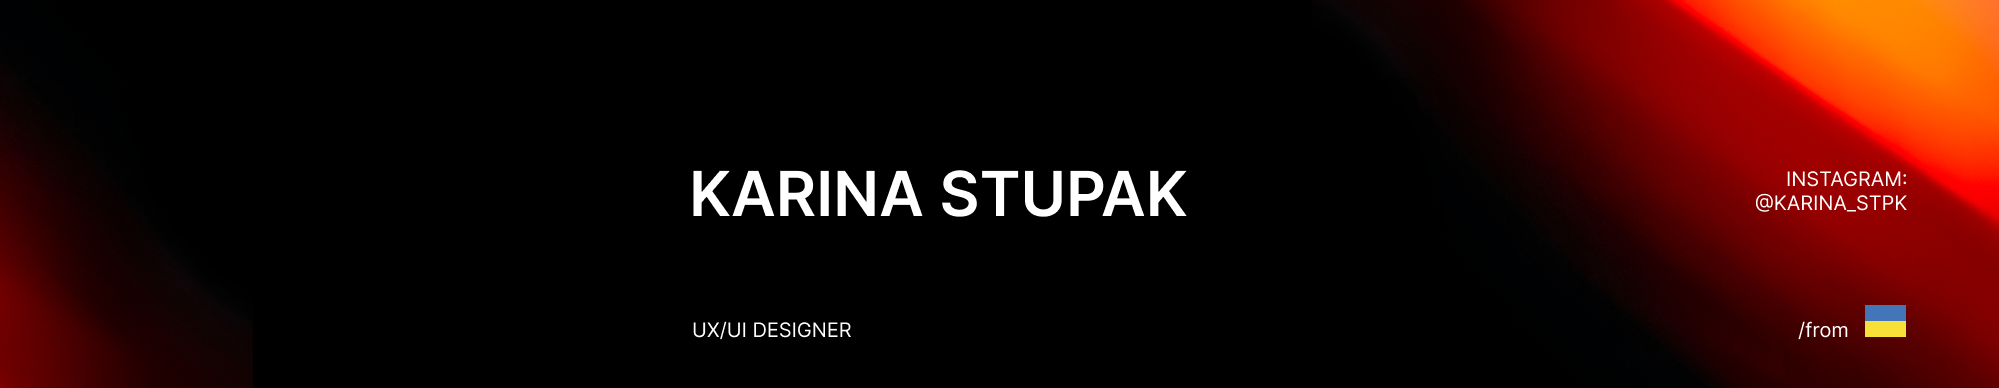 Karina Stupak's profile banner